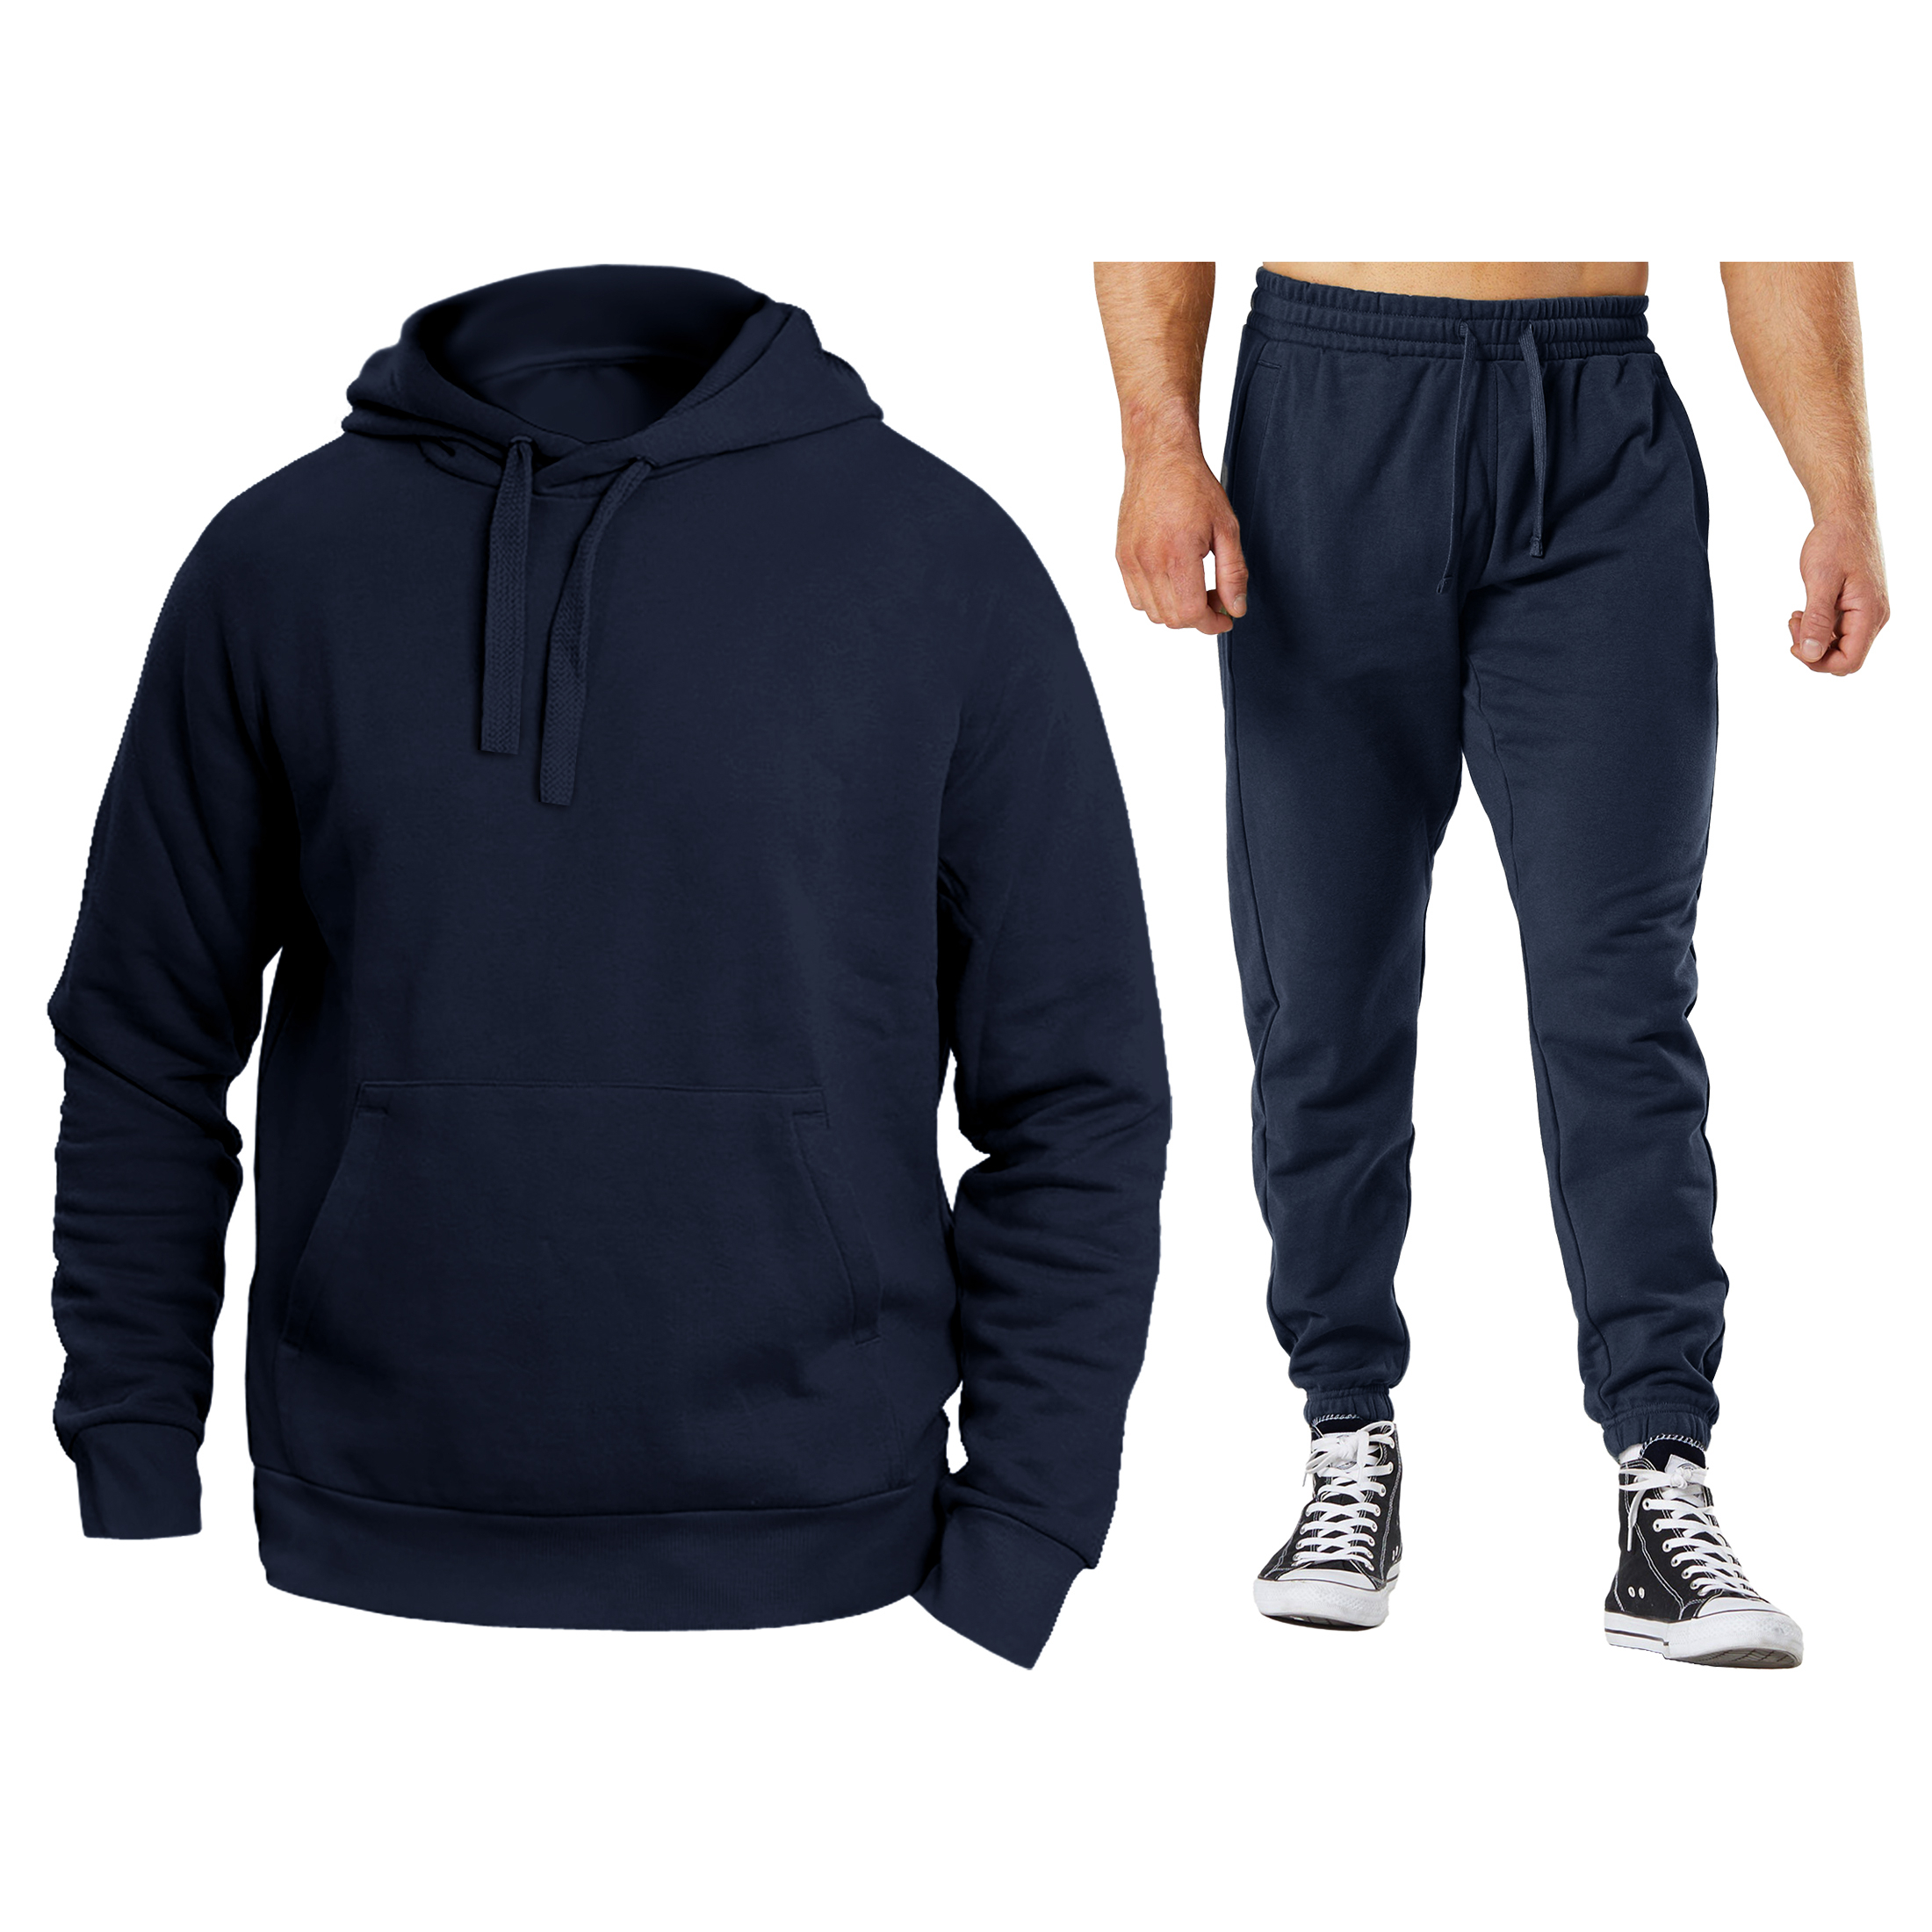 Men's Athletic Warm Jogging Pullover Active Sweatsuit - Black, X-Large